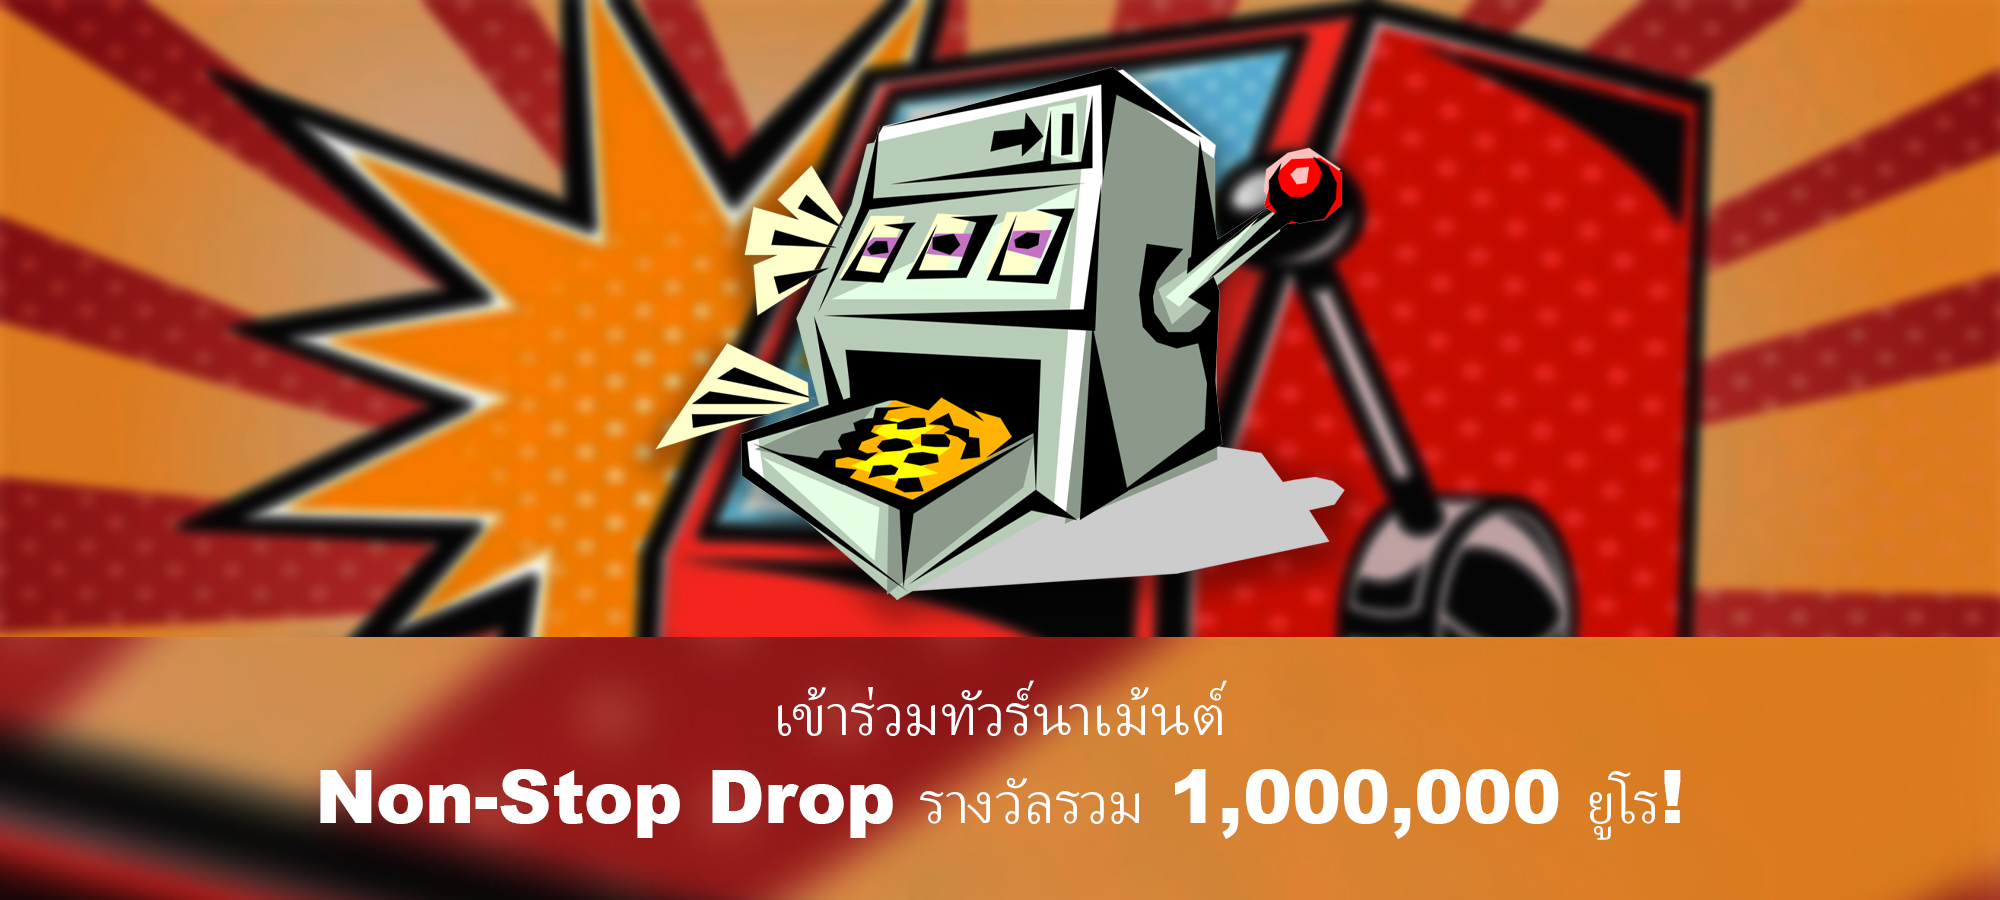 Non-Stop Drop: การแข่งขันยิ่งใหญ่จาก Playson พร้อมรางวัลรวม €1,000,000!